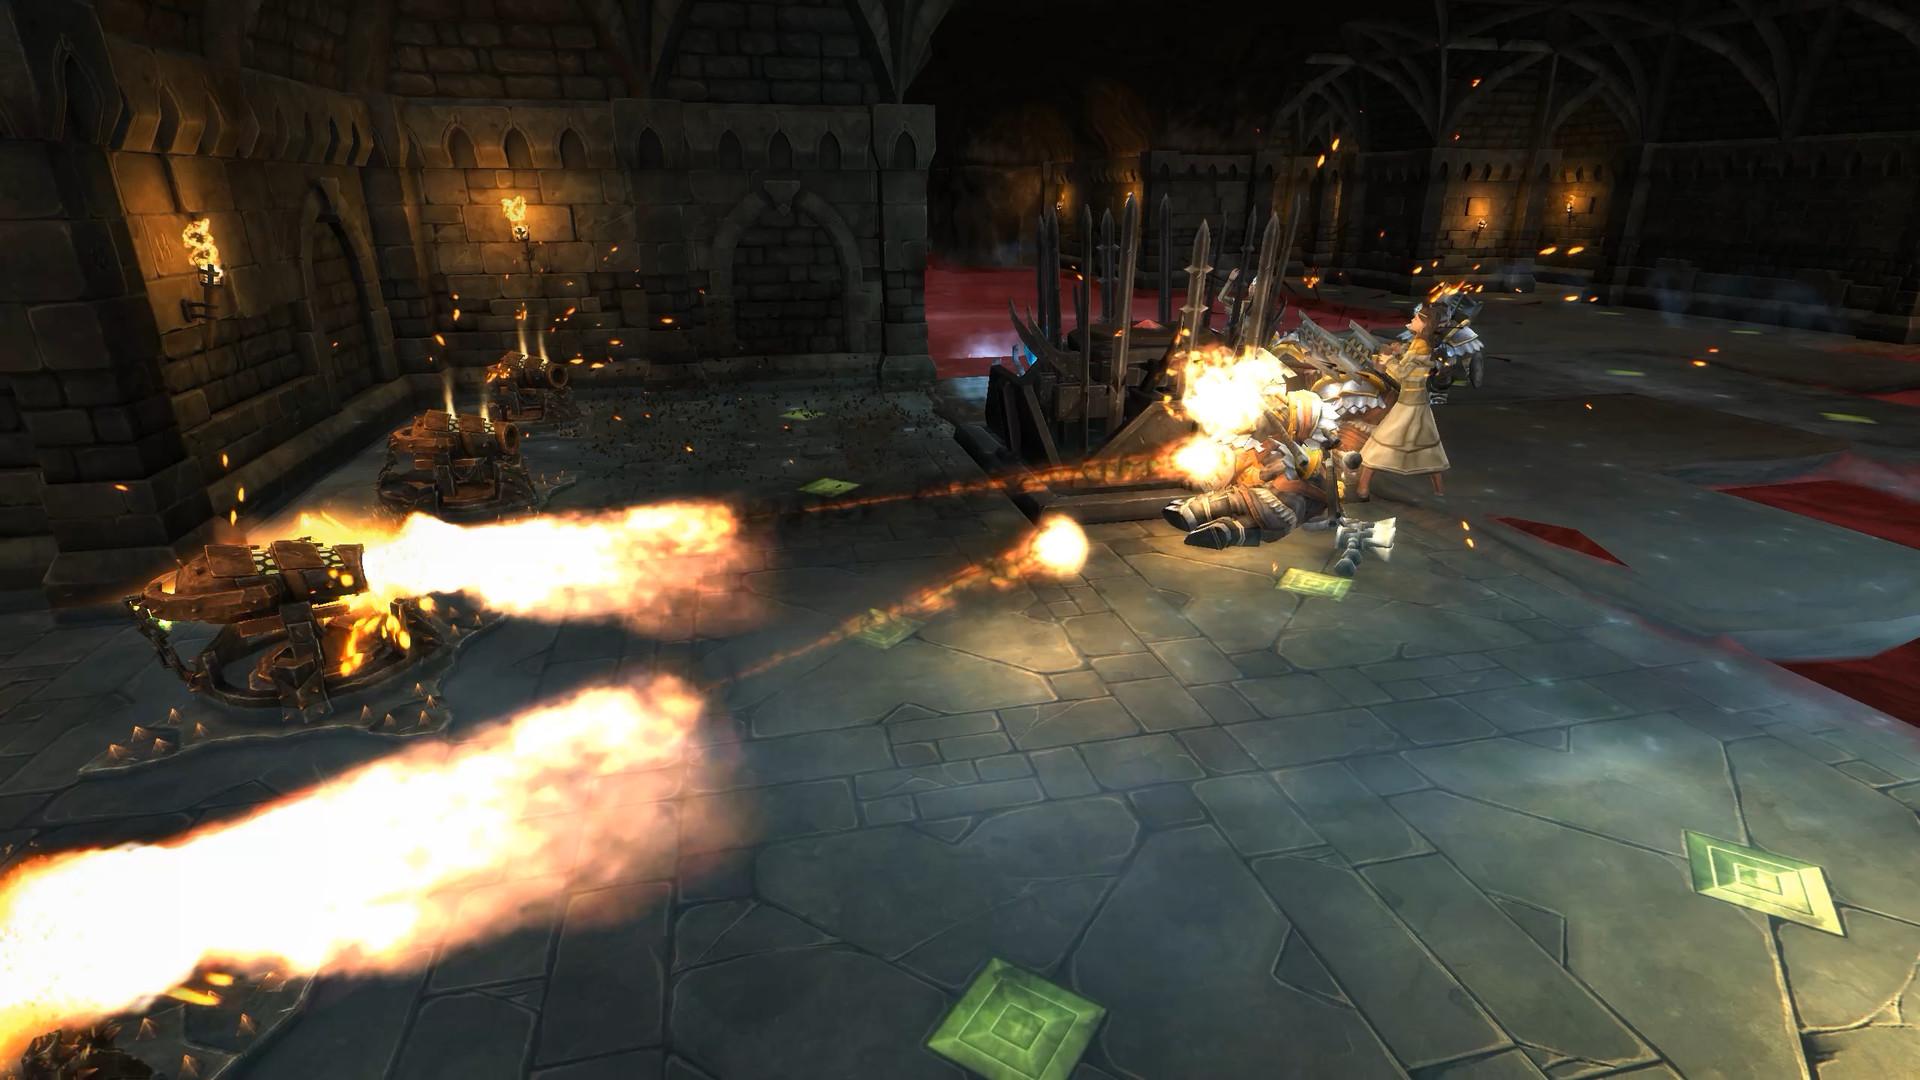 Screenshot №4 from game War for the Overworld